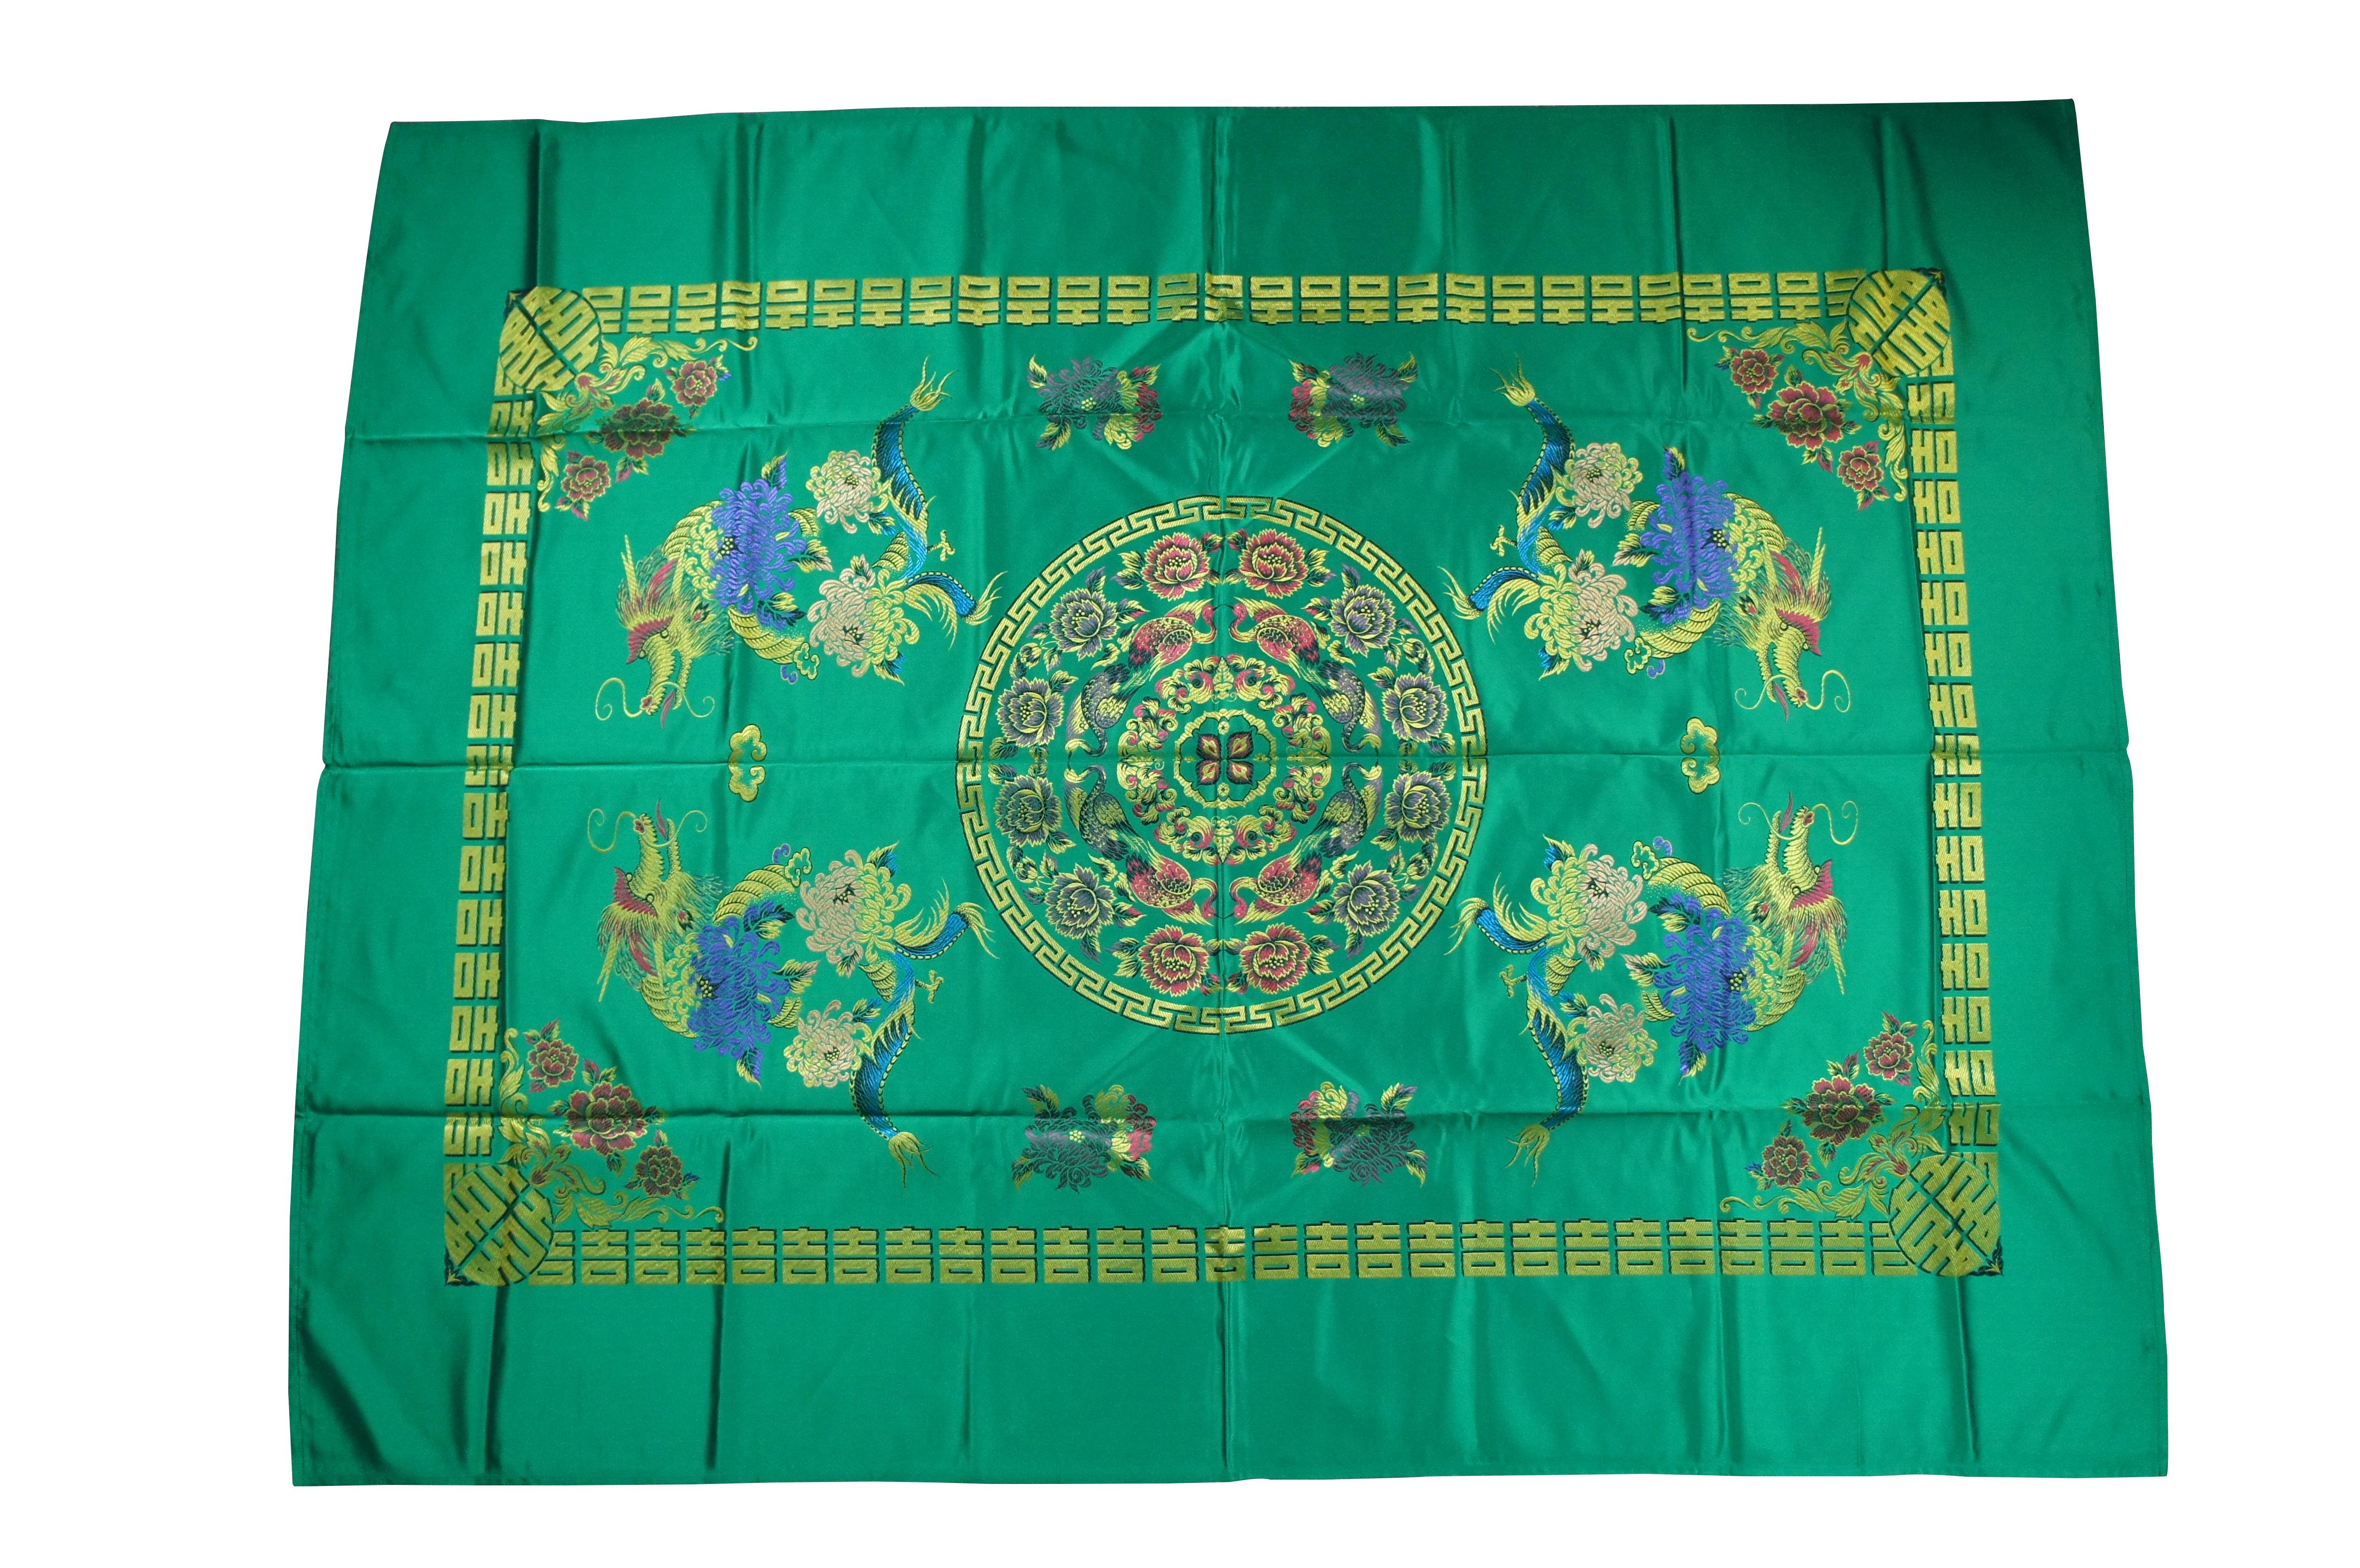 2 Koreanischer Metallic-Wandteppich aus bestickter Seide mit Pfauen-D Drachen-Textil 83